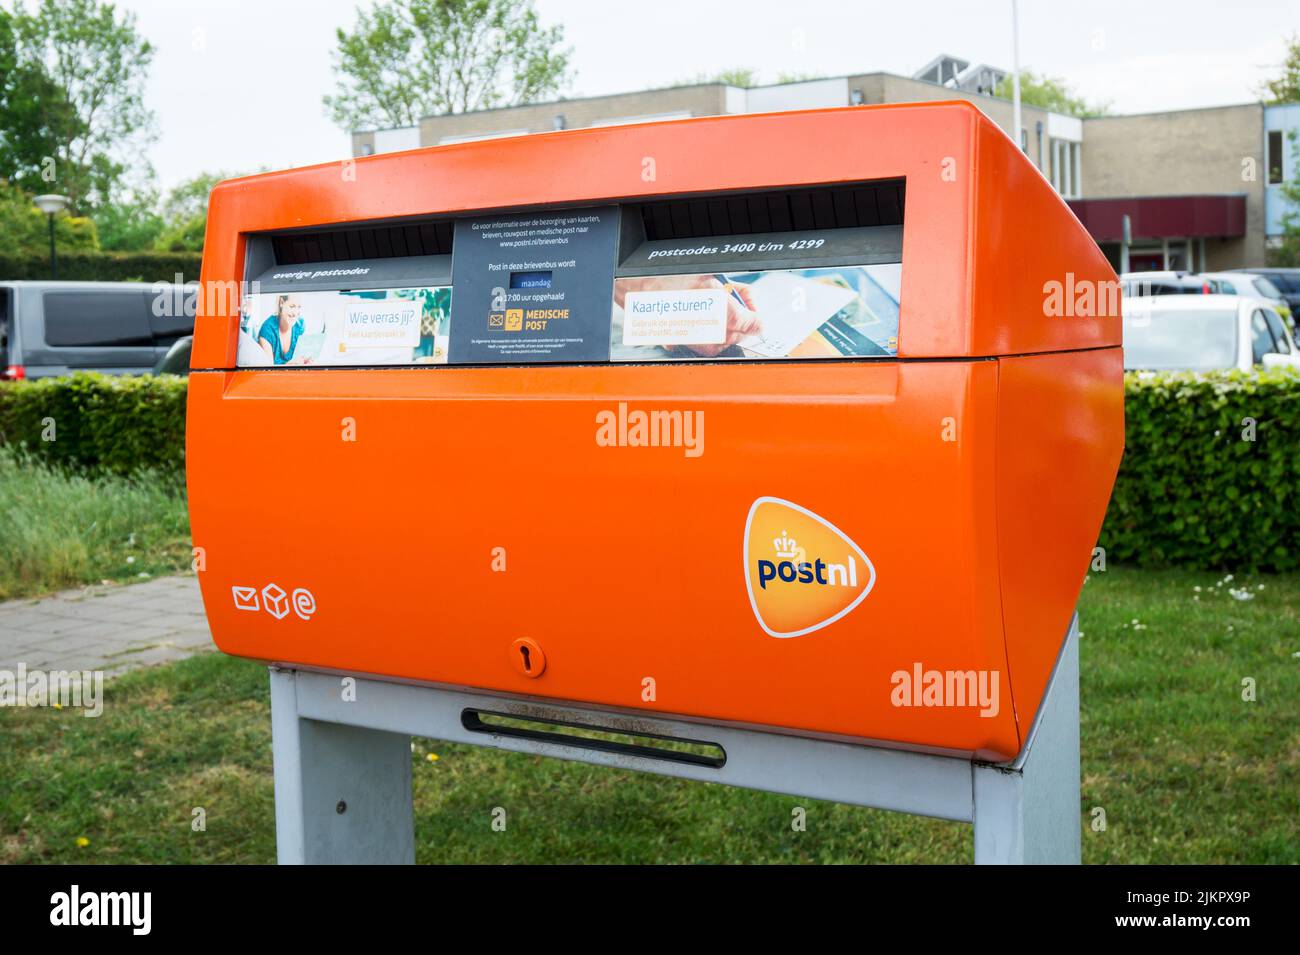 PostNL orange mail box with logo. Dutch postal service company letterbox. Hertogenbosch, the Netherlands - May 7, 2022. Stock Photo